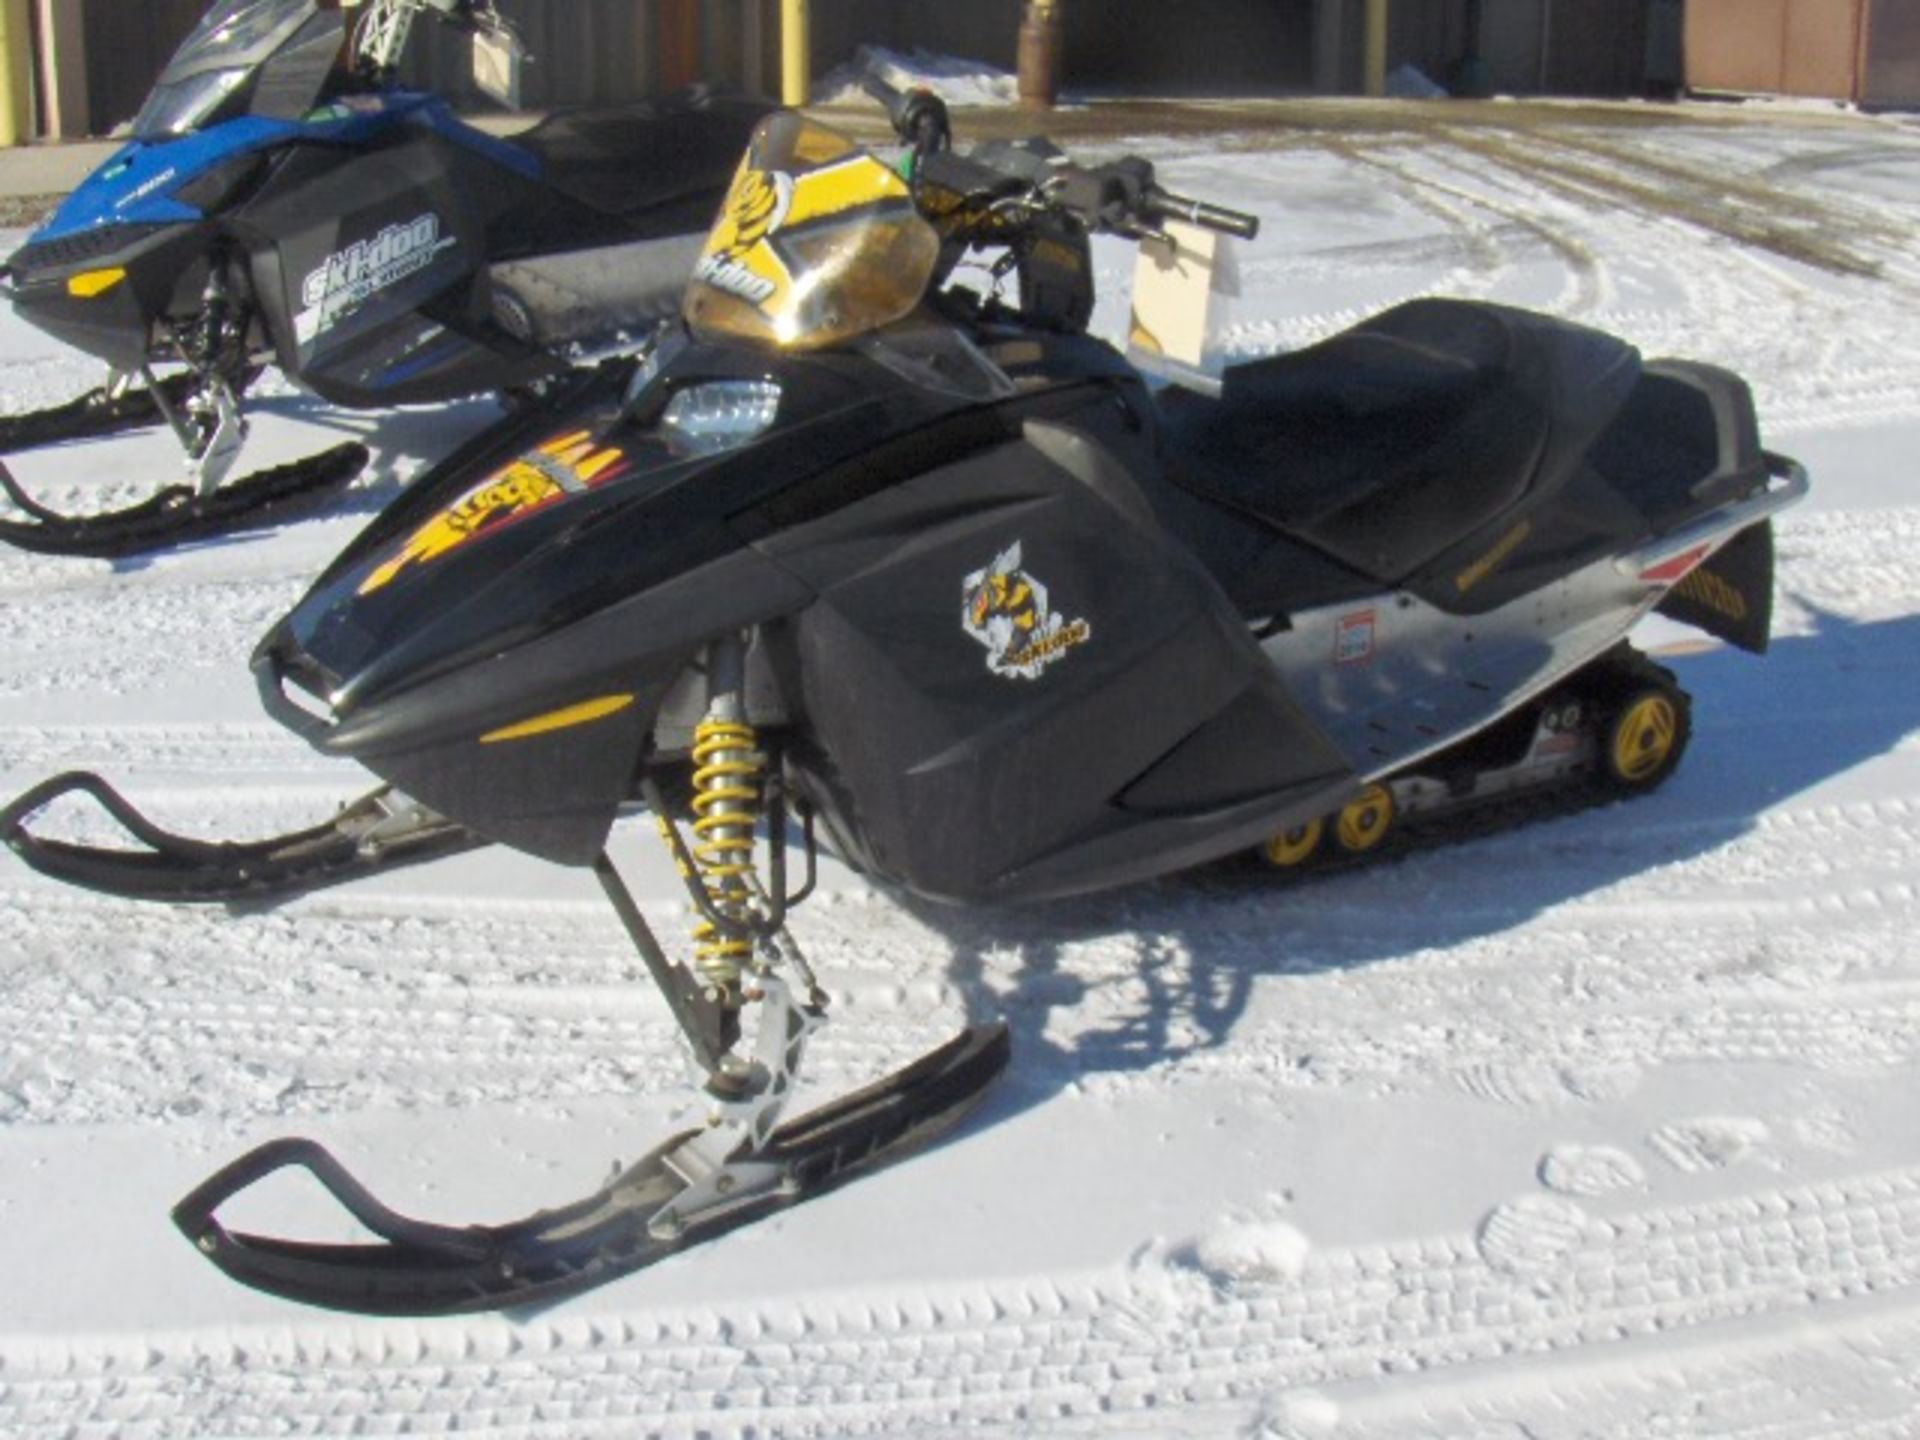 2004 SKI DOO 600 SDI MXZ  2BPS287404V000481 snowmobile, owner started at time of auction check in,